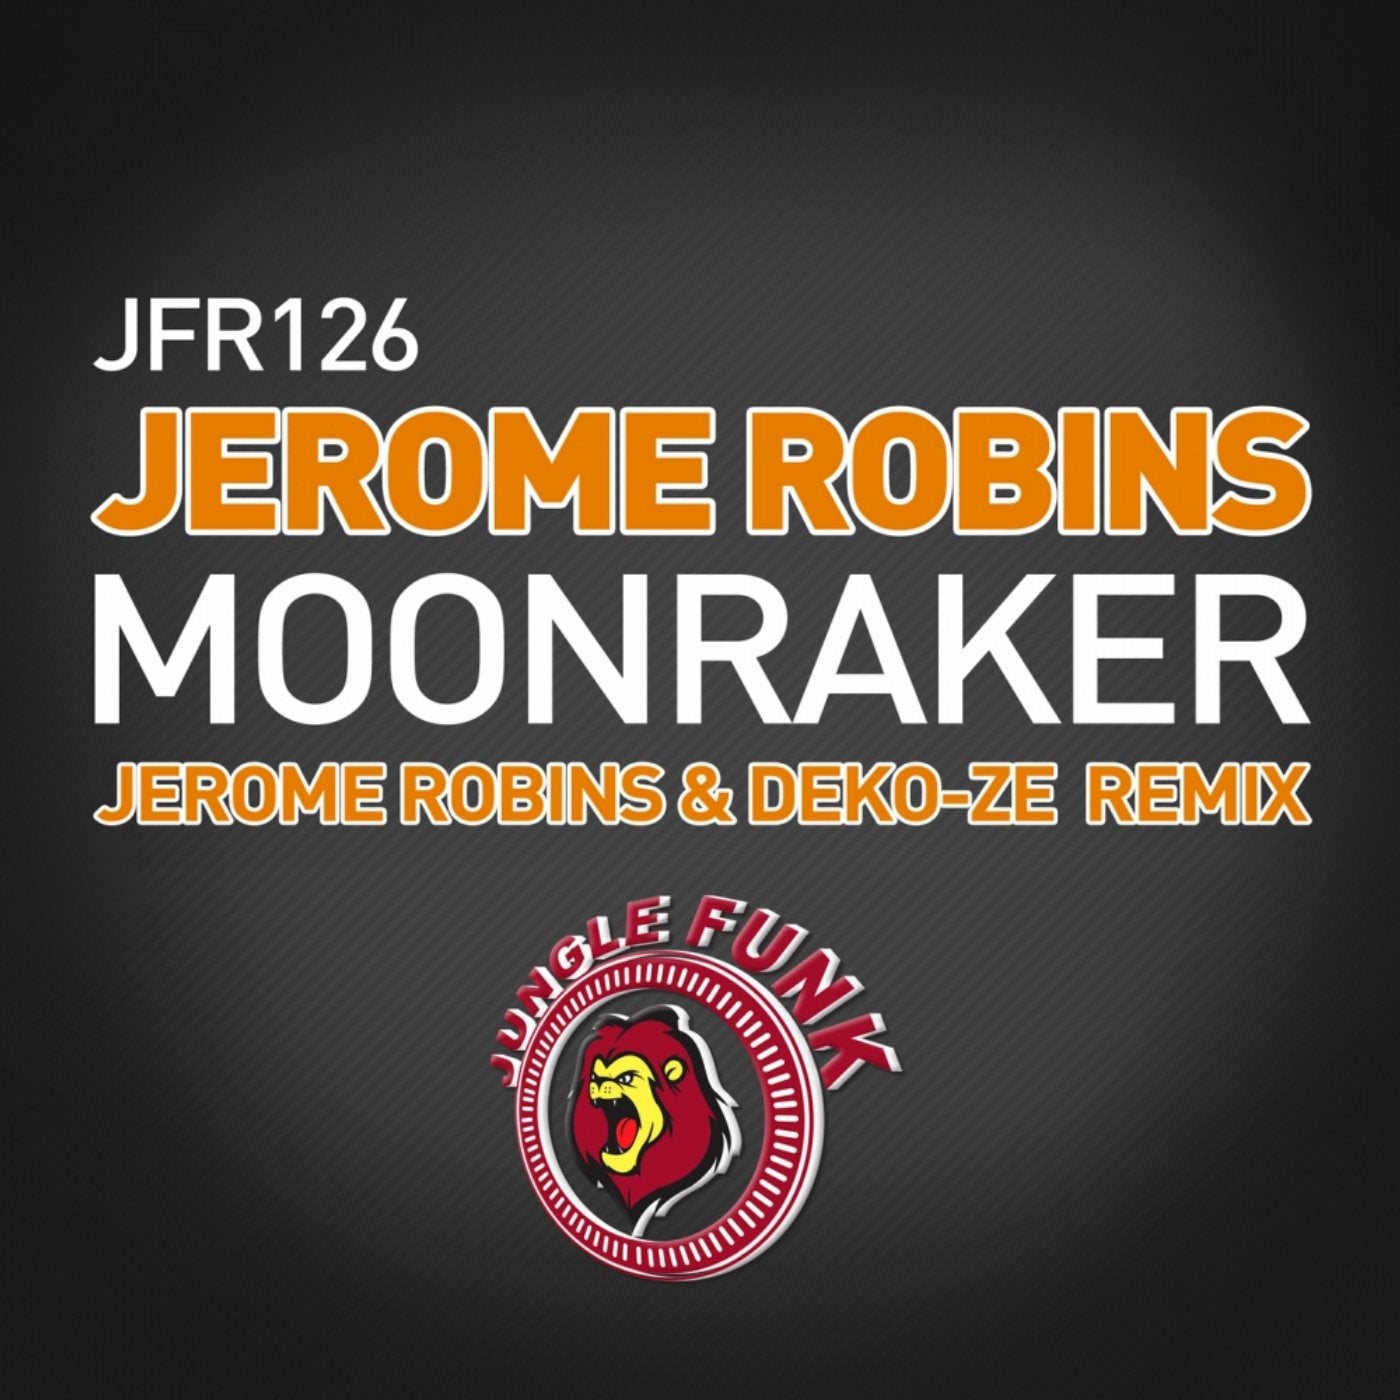 Moonraker (Jerome Robins & Deko-ze Remix)